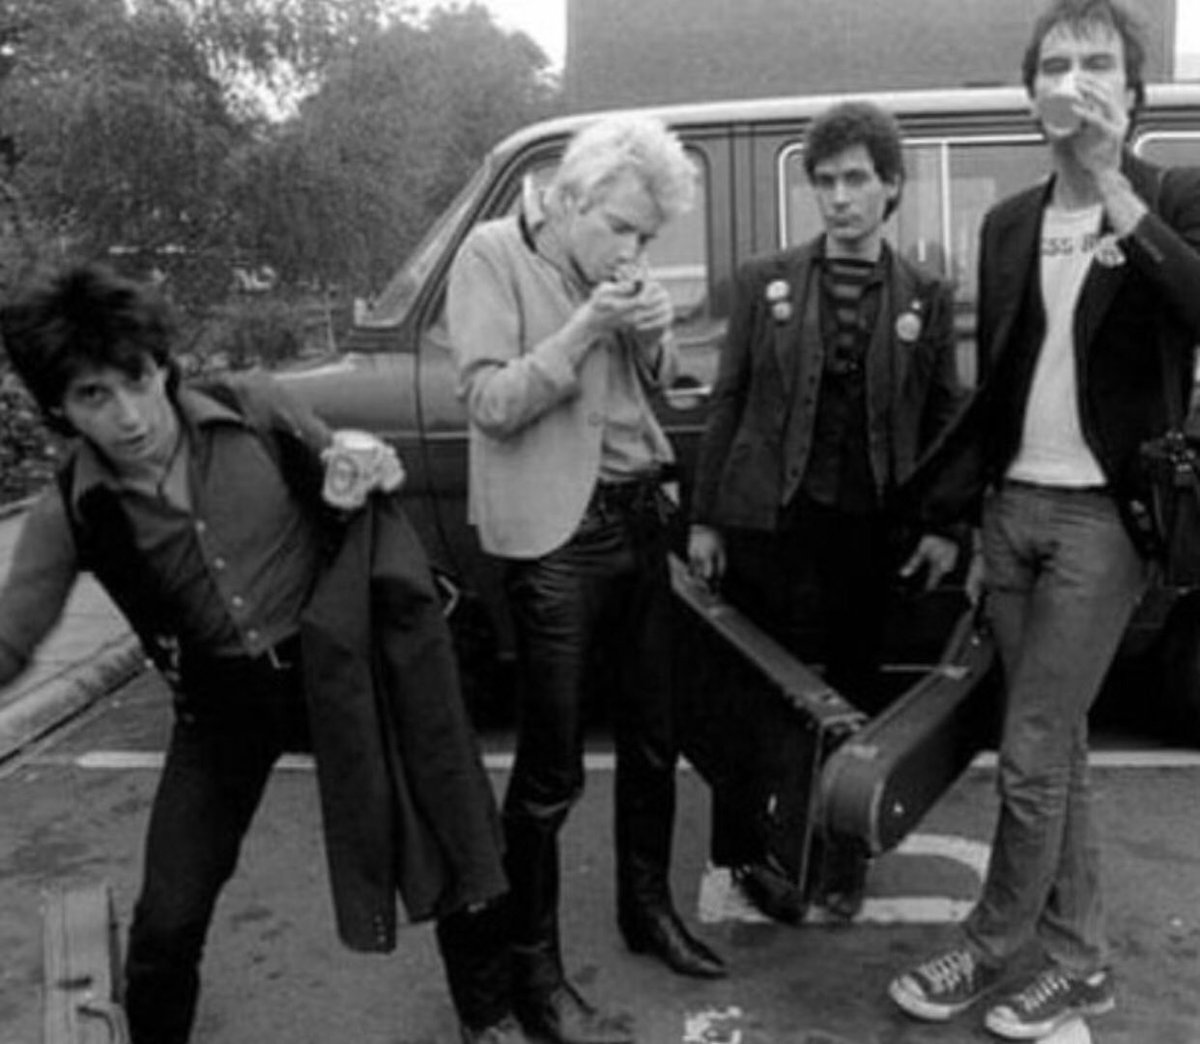 Stumblin’ out of the van... #LAMF #punkrock #rocknroll #walterlure #walterlureslamf #theheartbreakers #johnnythunders #billyrath #jerrynolan #johnnythundersandtheheartbreakers #70srock